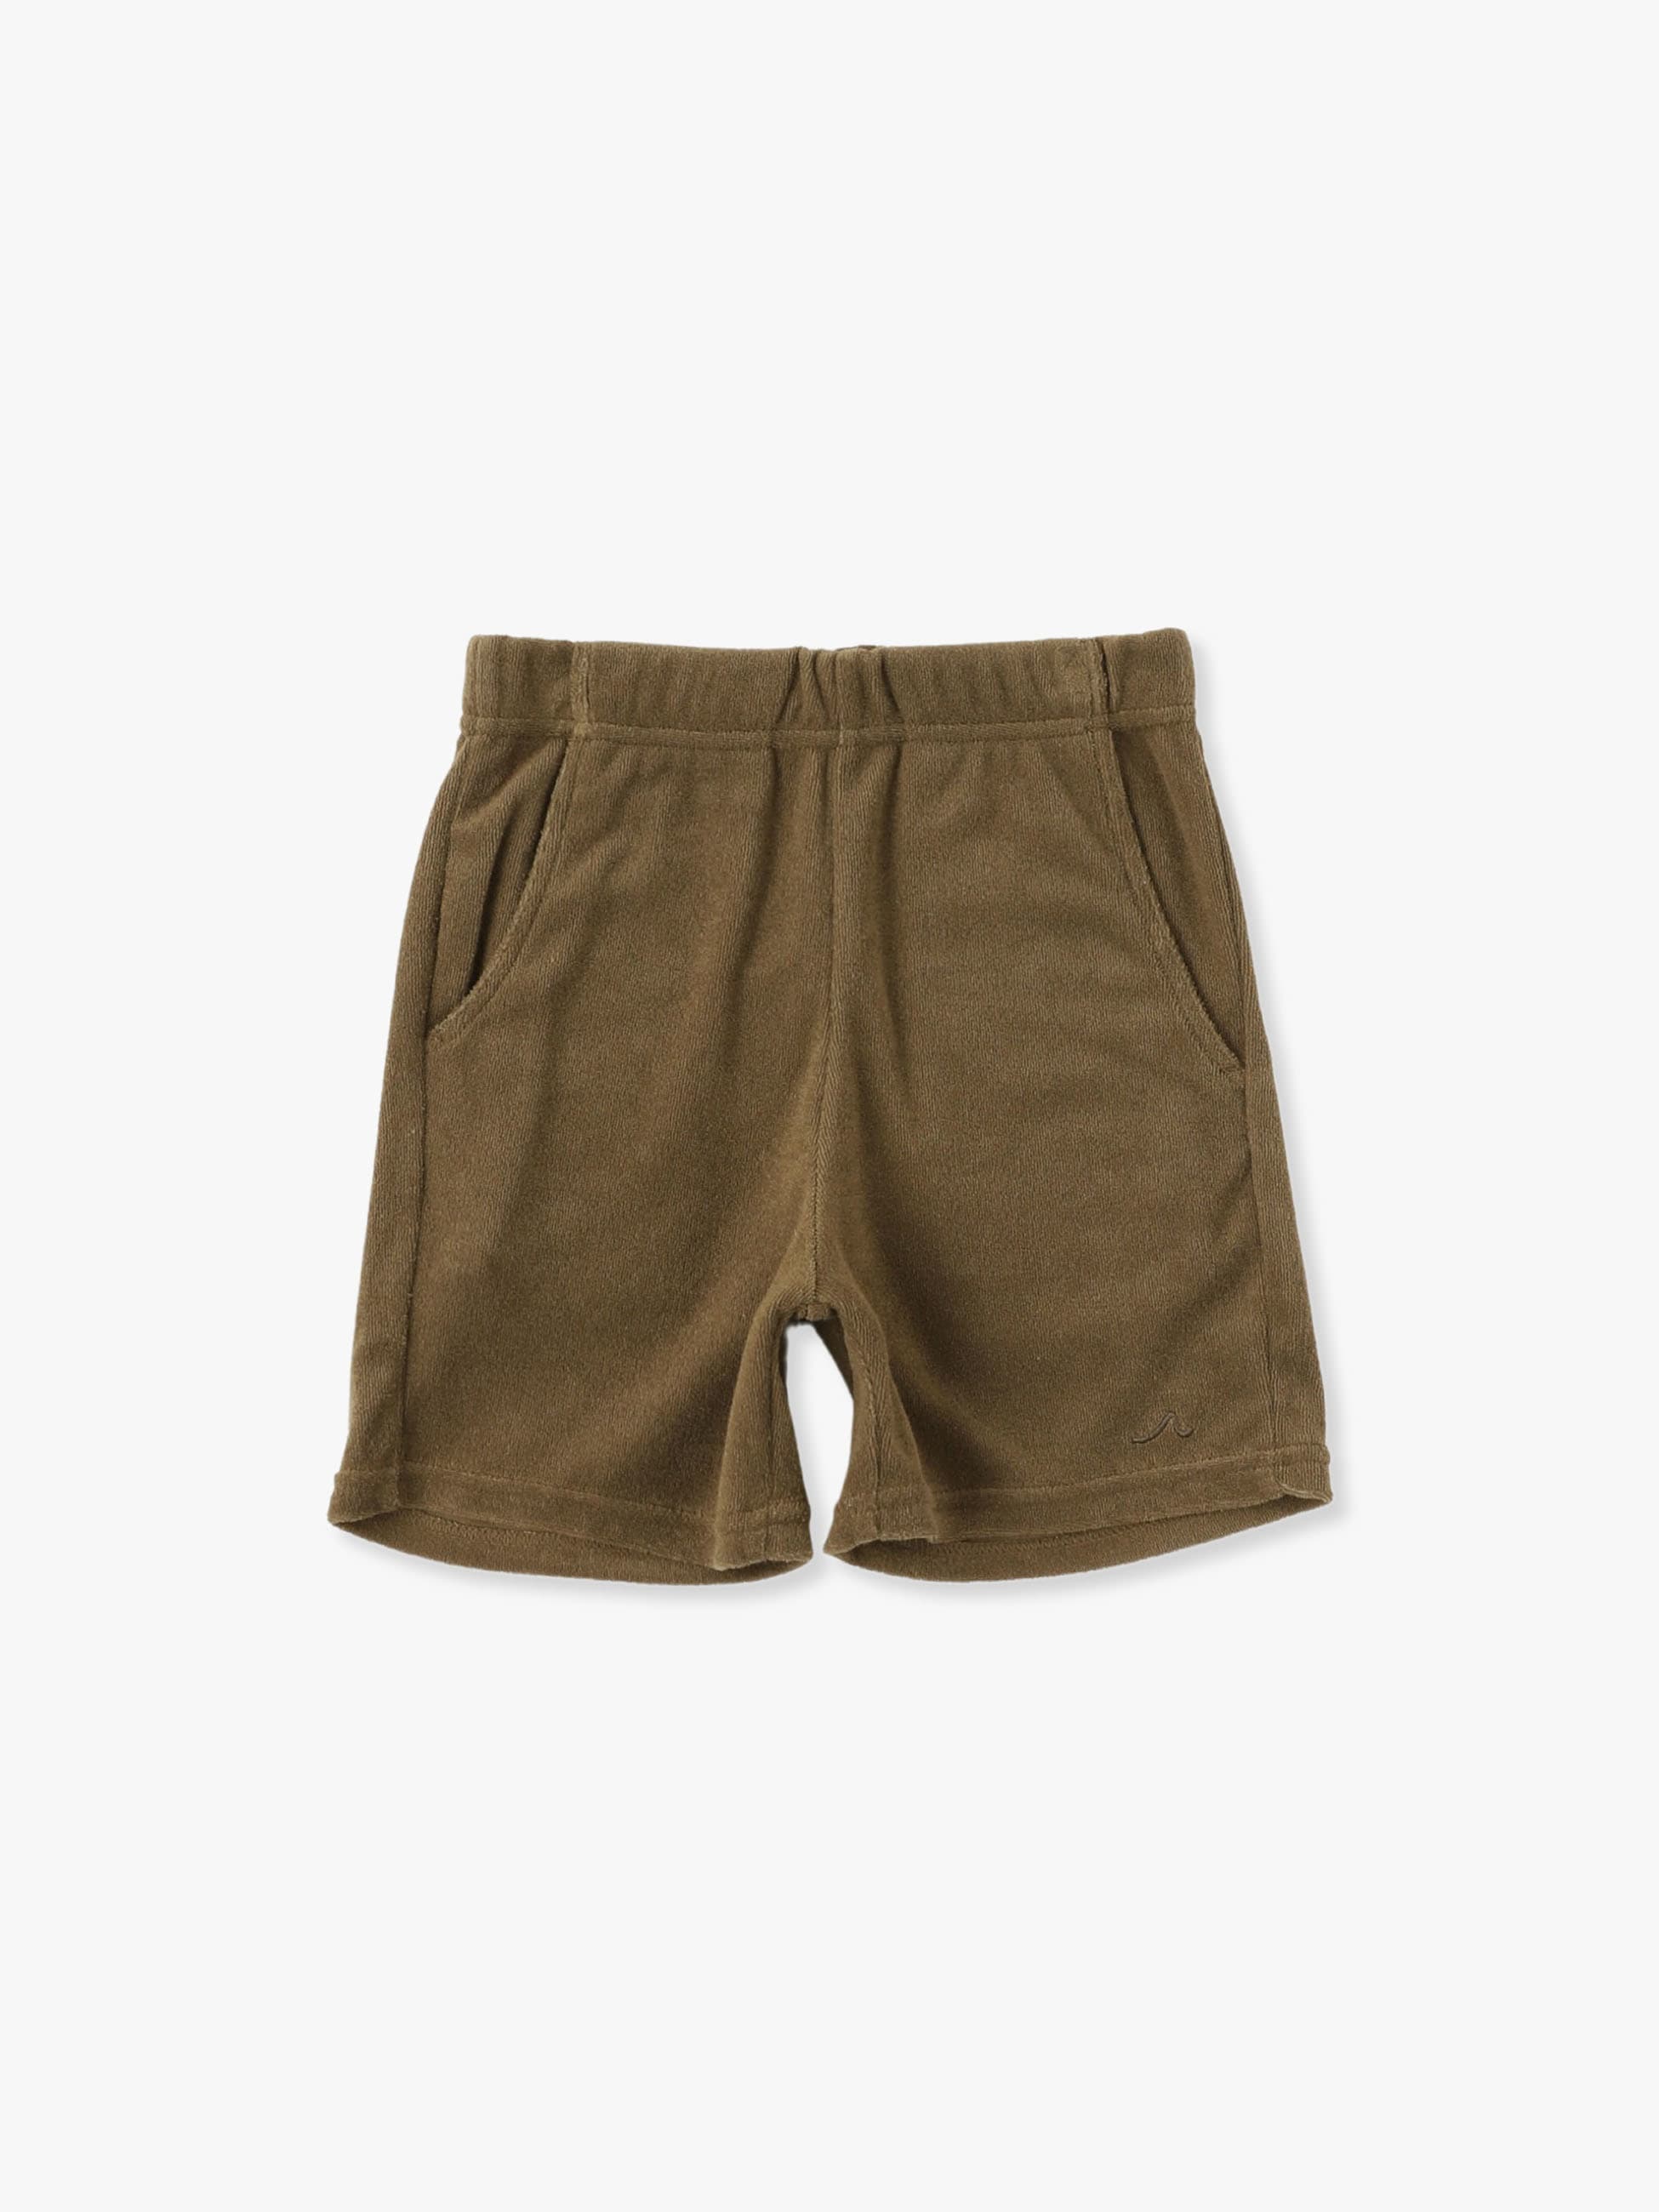 Soft Pile Shorts (beige/khaki)｜Ron Herman(ロンハーマン)｜Ron Herman